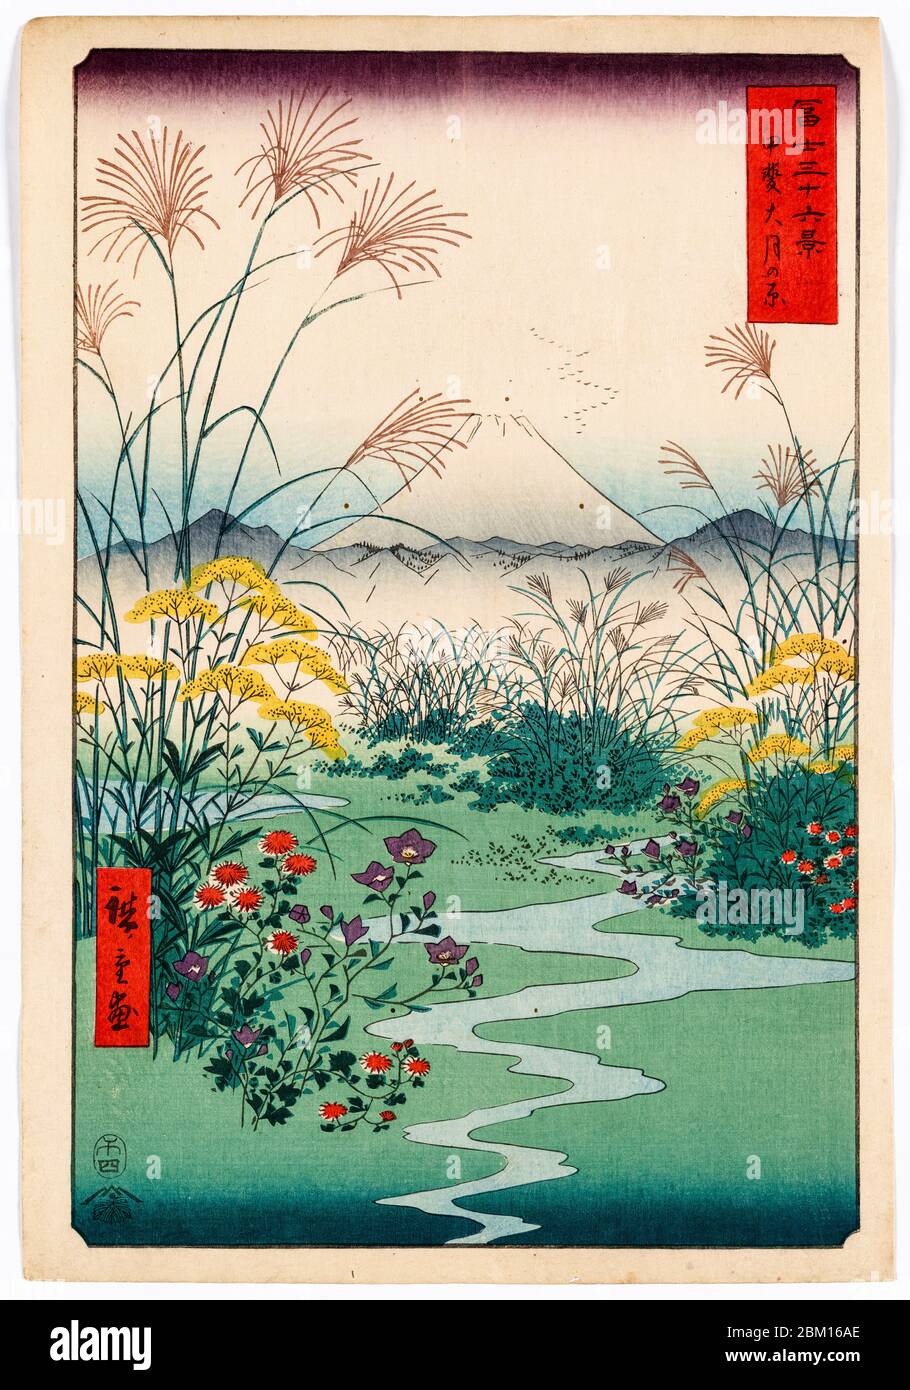 Utagawa Hiroshige, The Ōtsuki Plain in Kai Province, from the series 36 Views of Mount Fuji, woodblock print, 1858 Stock Photo